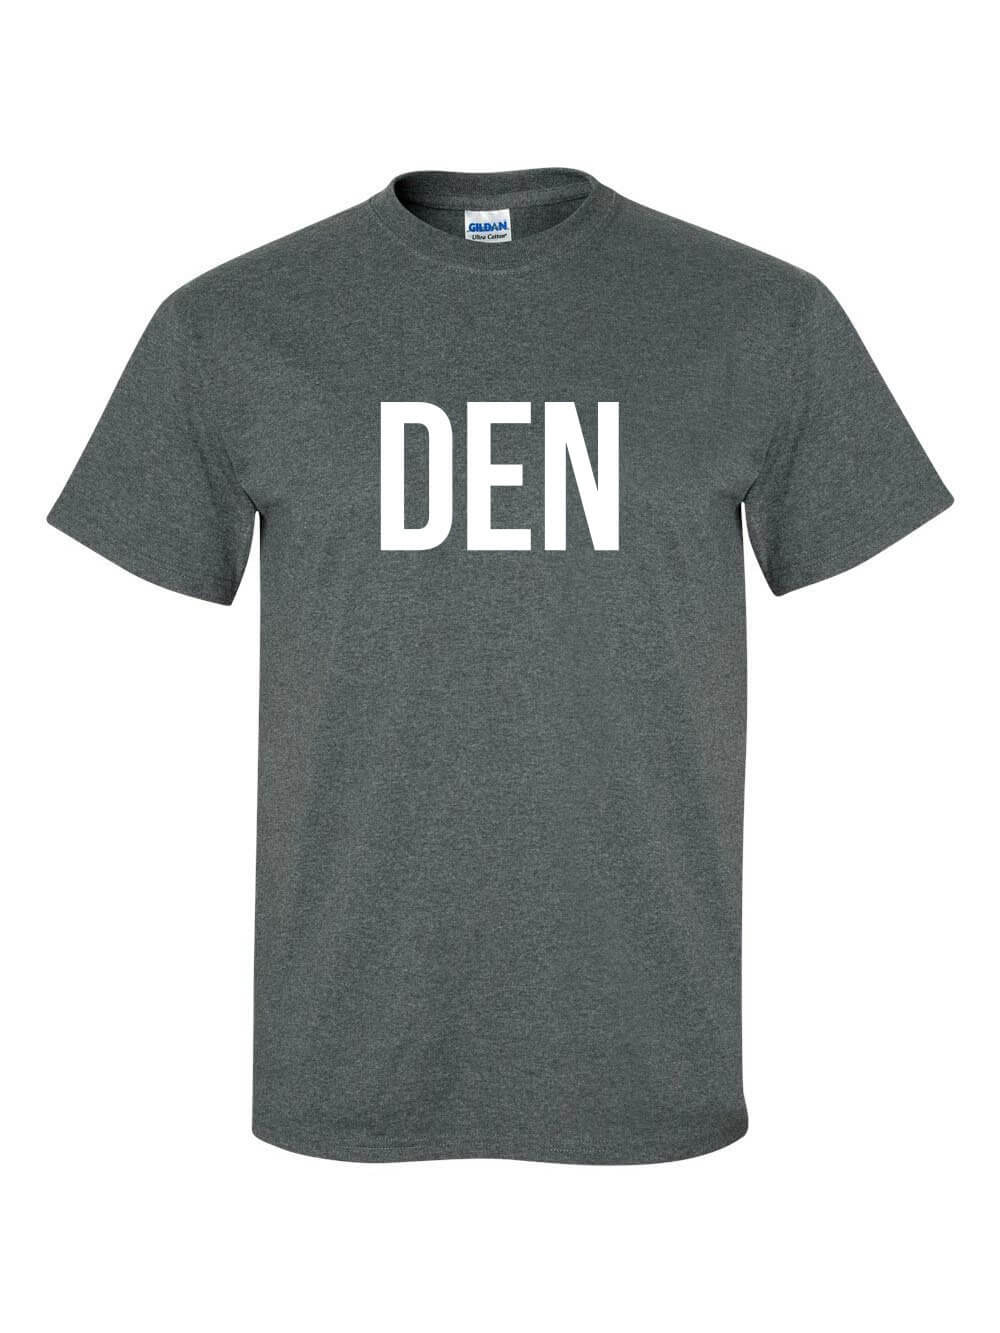 Denver International Airport Shirt - ToasterTees.com